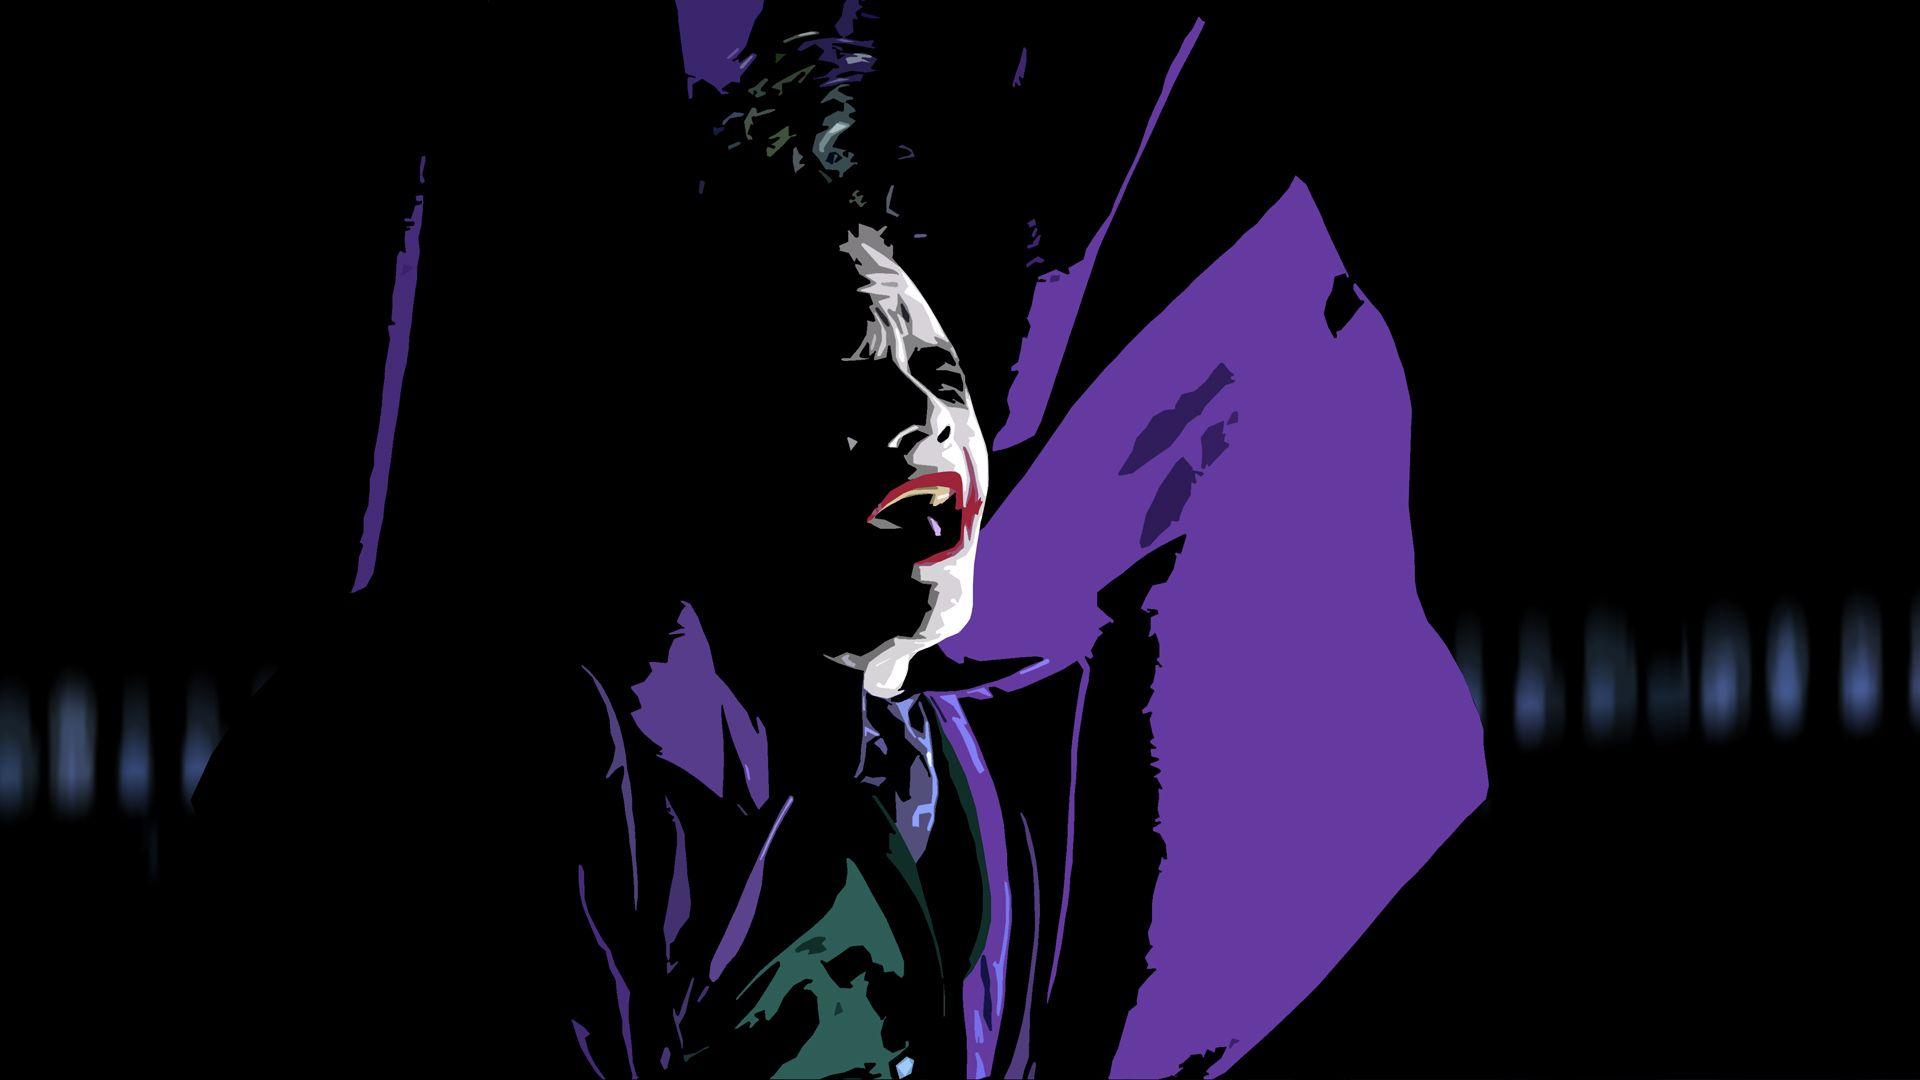 Joker wallpaper HD 1080p. Animated Desktop Wallpaper. Joker HD wallpaper, Joker wallpaper, Anime joker